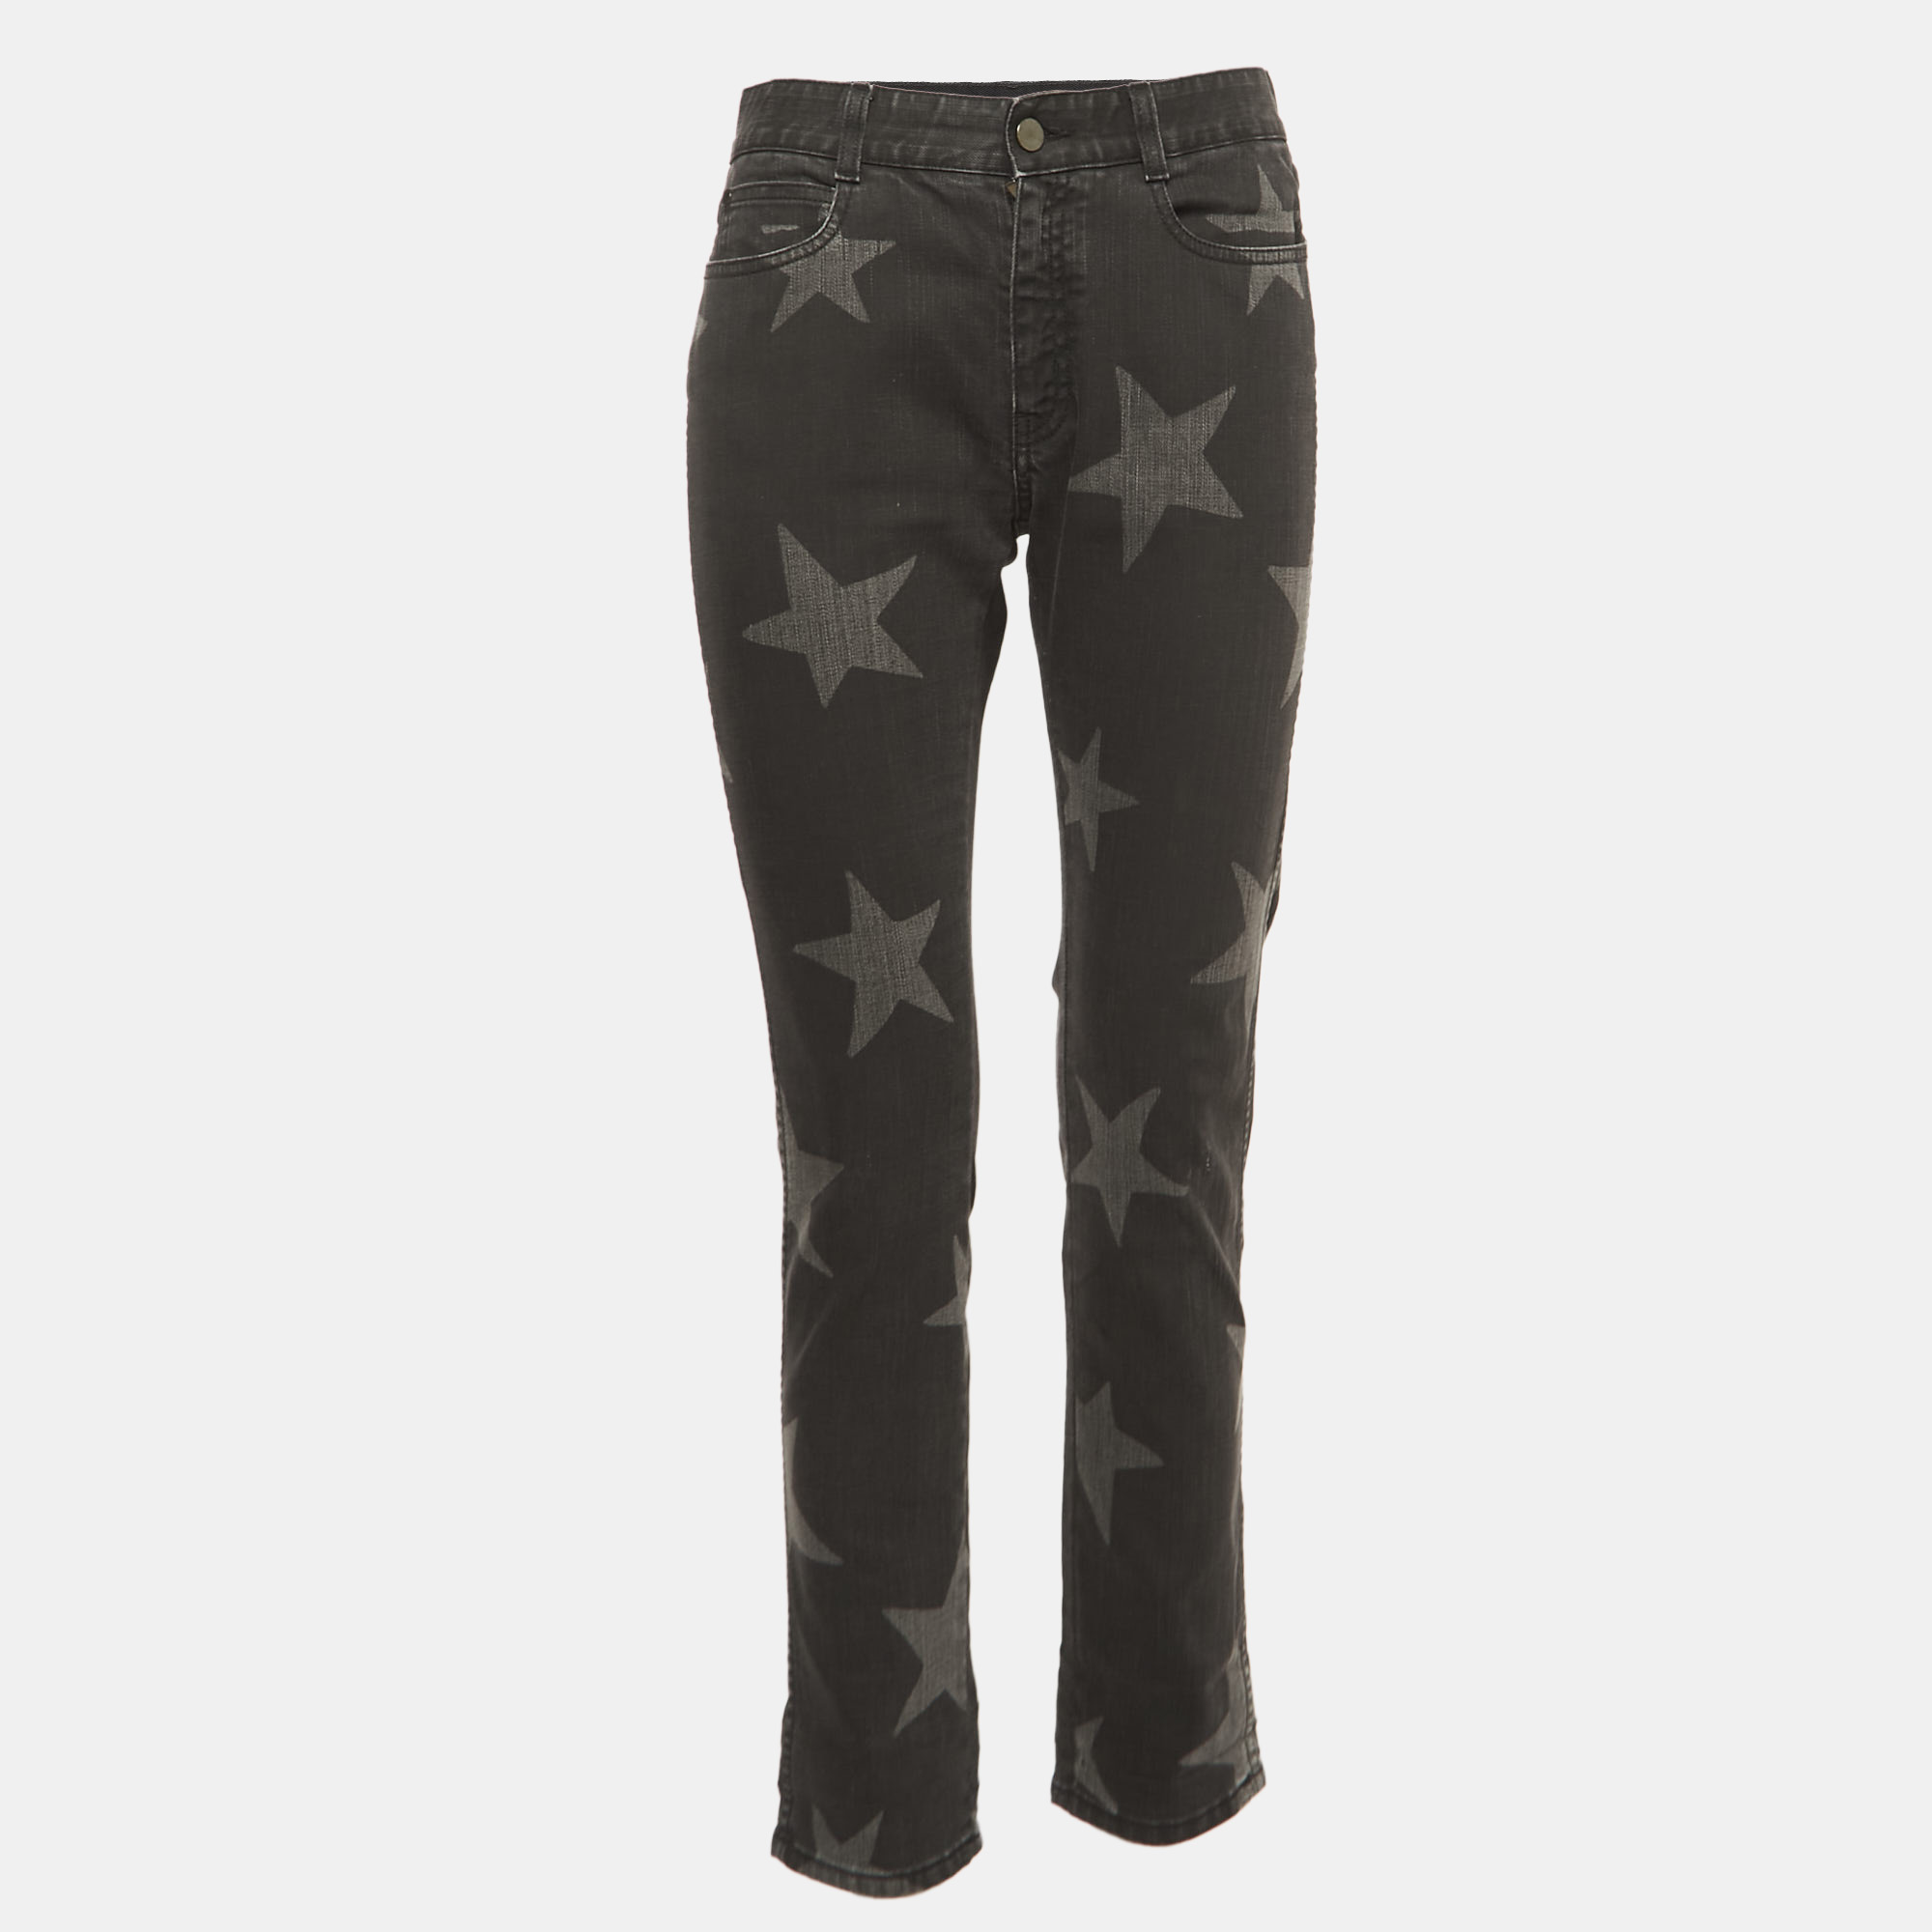 Stella McCartney Black Washed Stars Print Denim Jeans S Waist 26